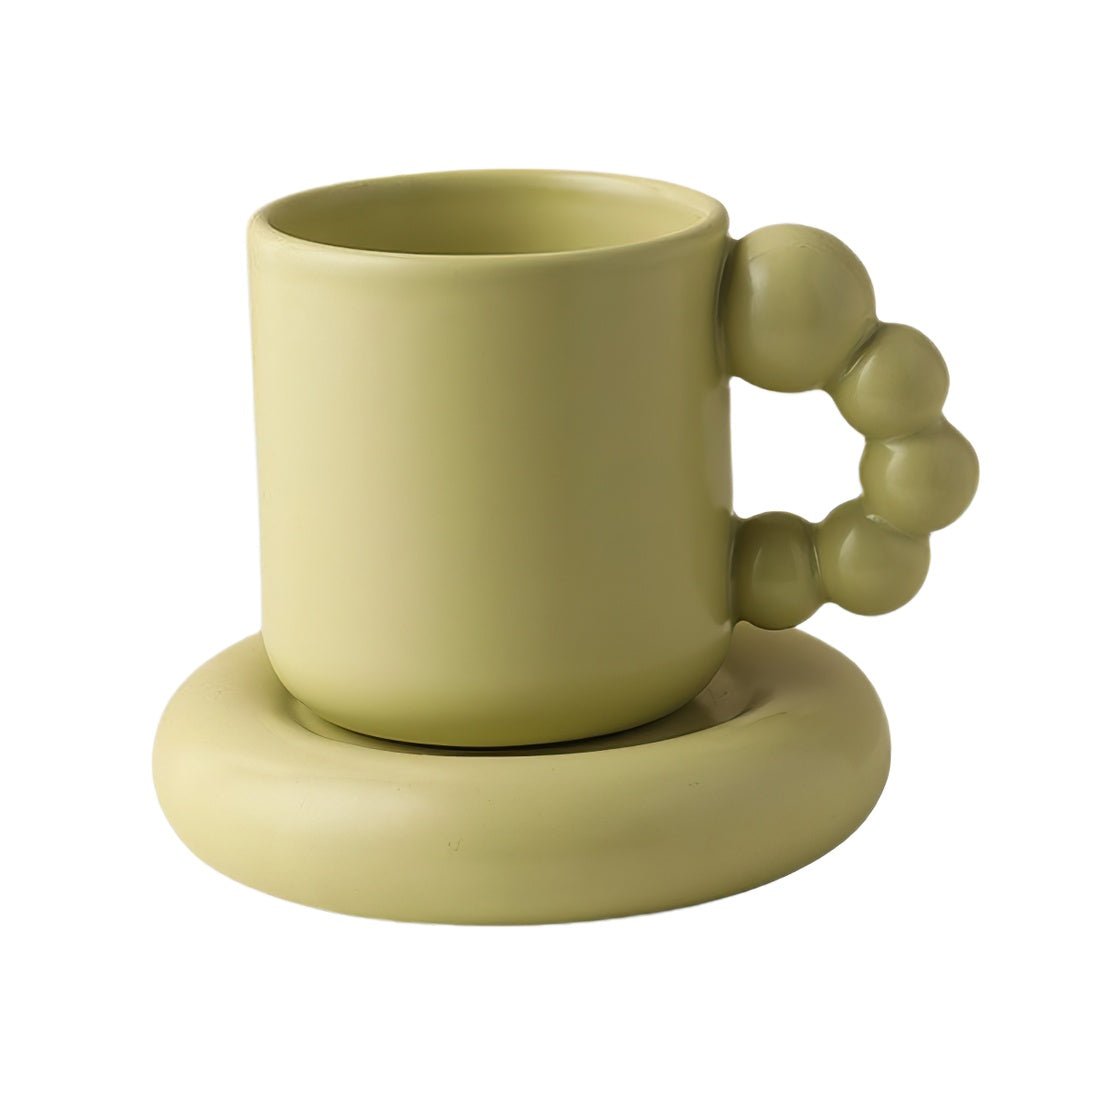 Green, ceramic pearl handle mug with matching saucer